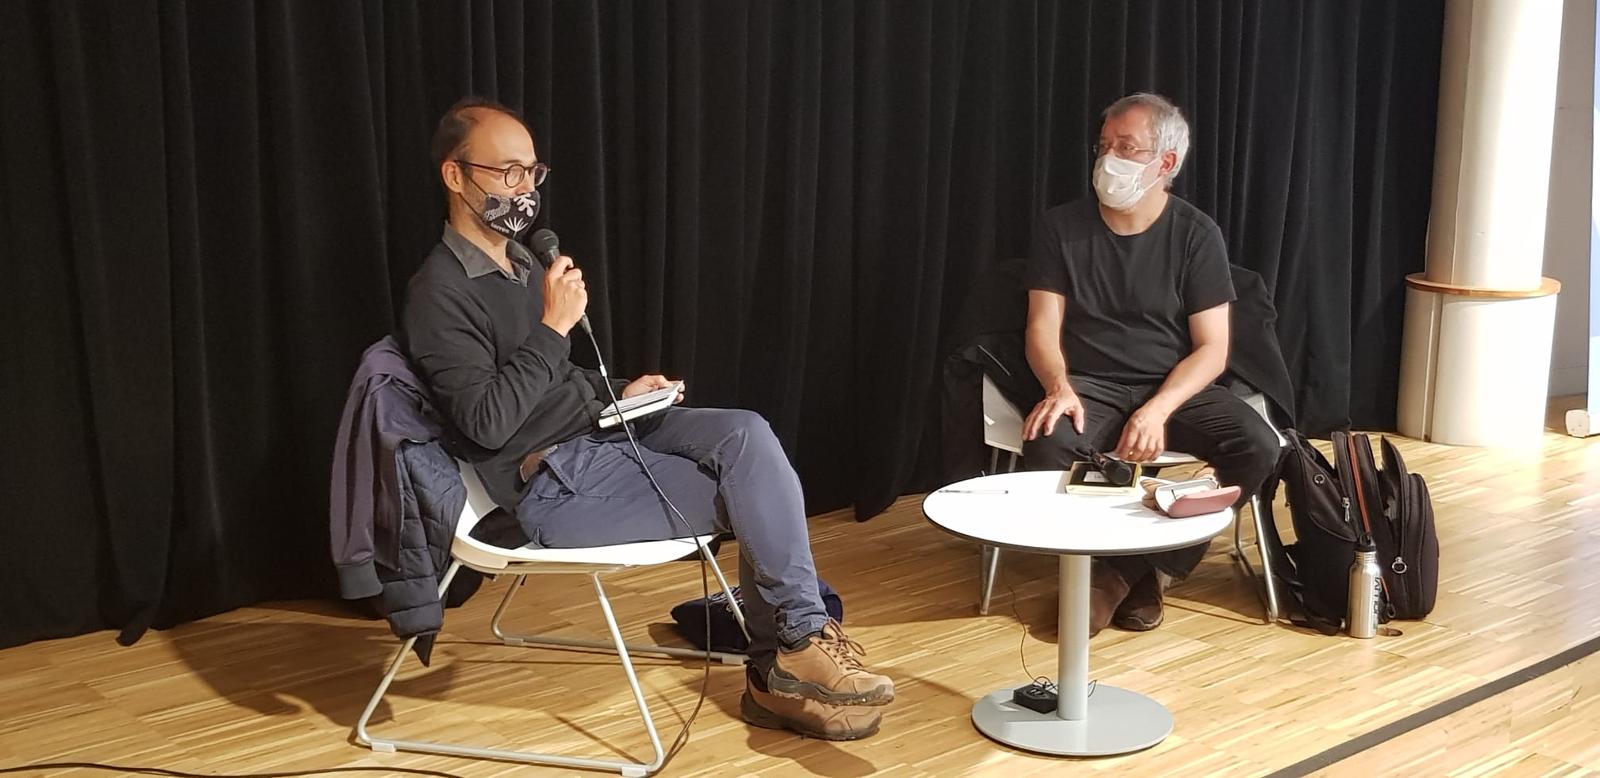  Jorge Riechmann conversa amb Gabi Martínez, dissabte 17, Biblioteca Guinardó - Mercè Rodoreda, Barcelona Poesia 2020